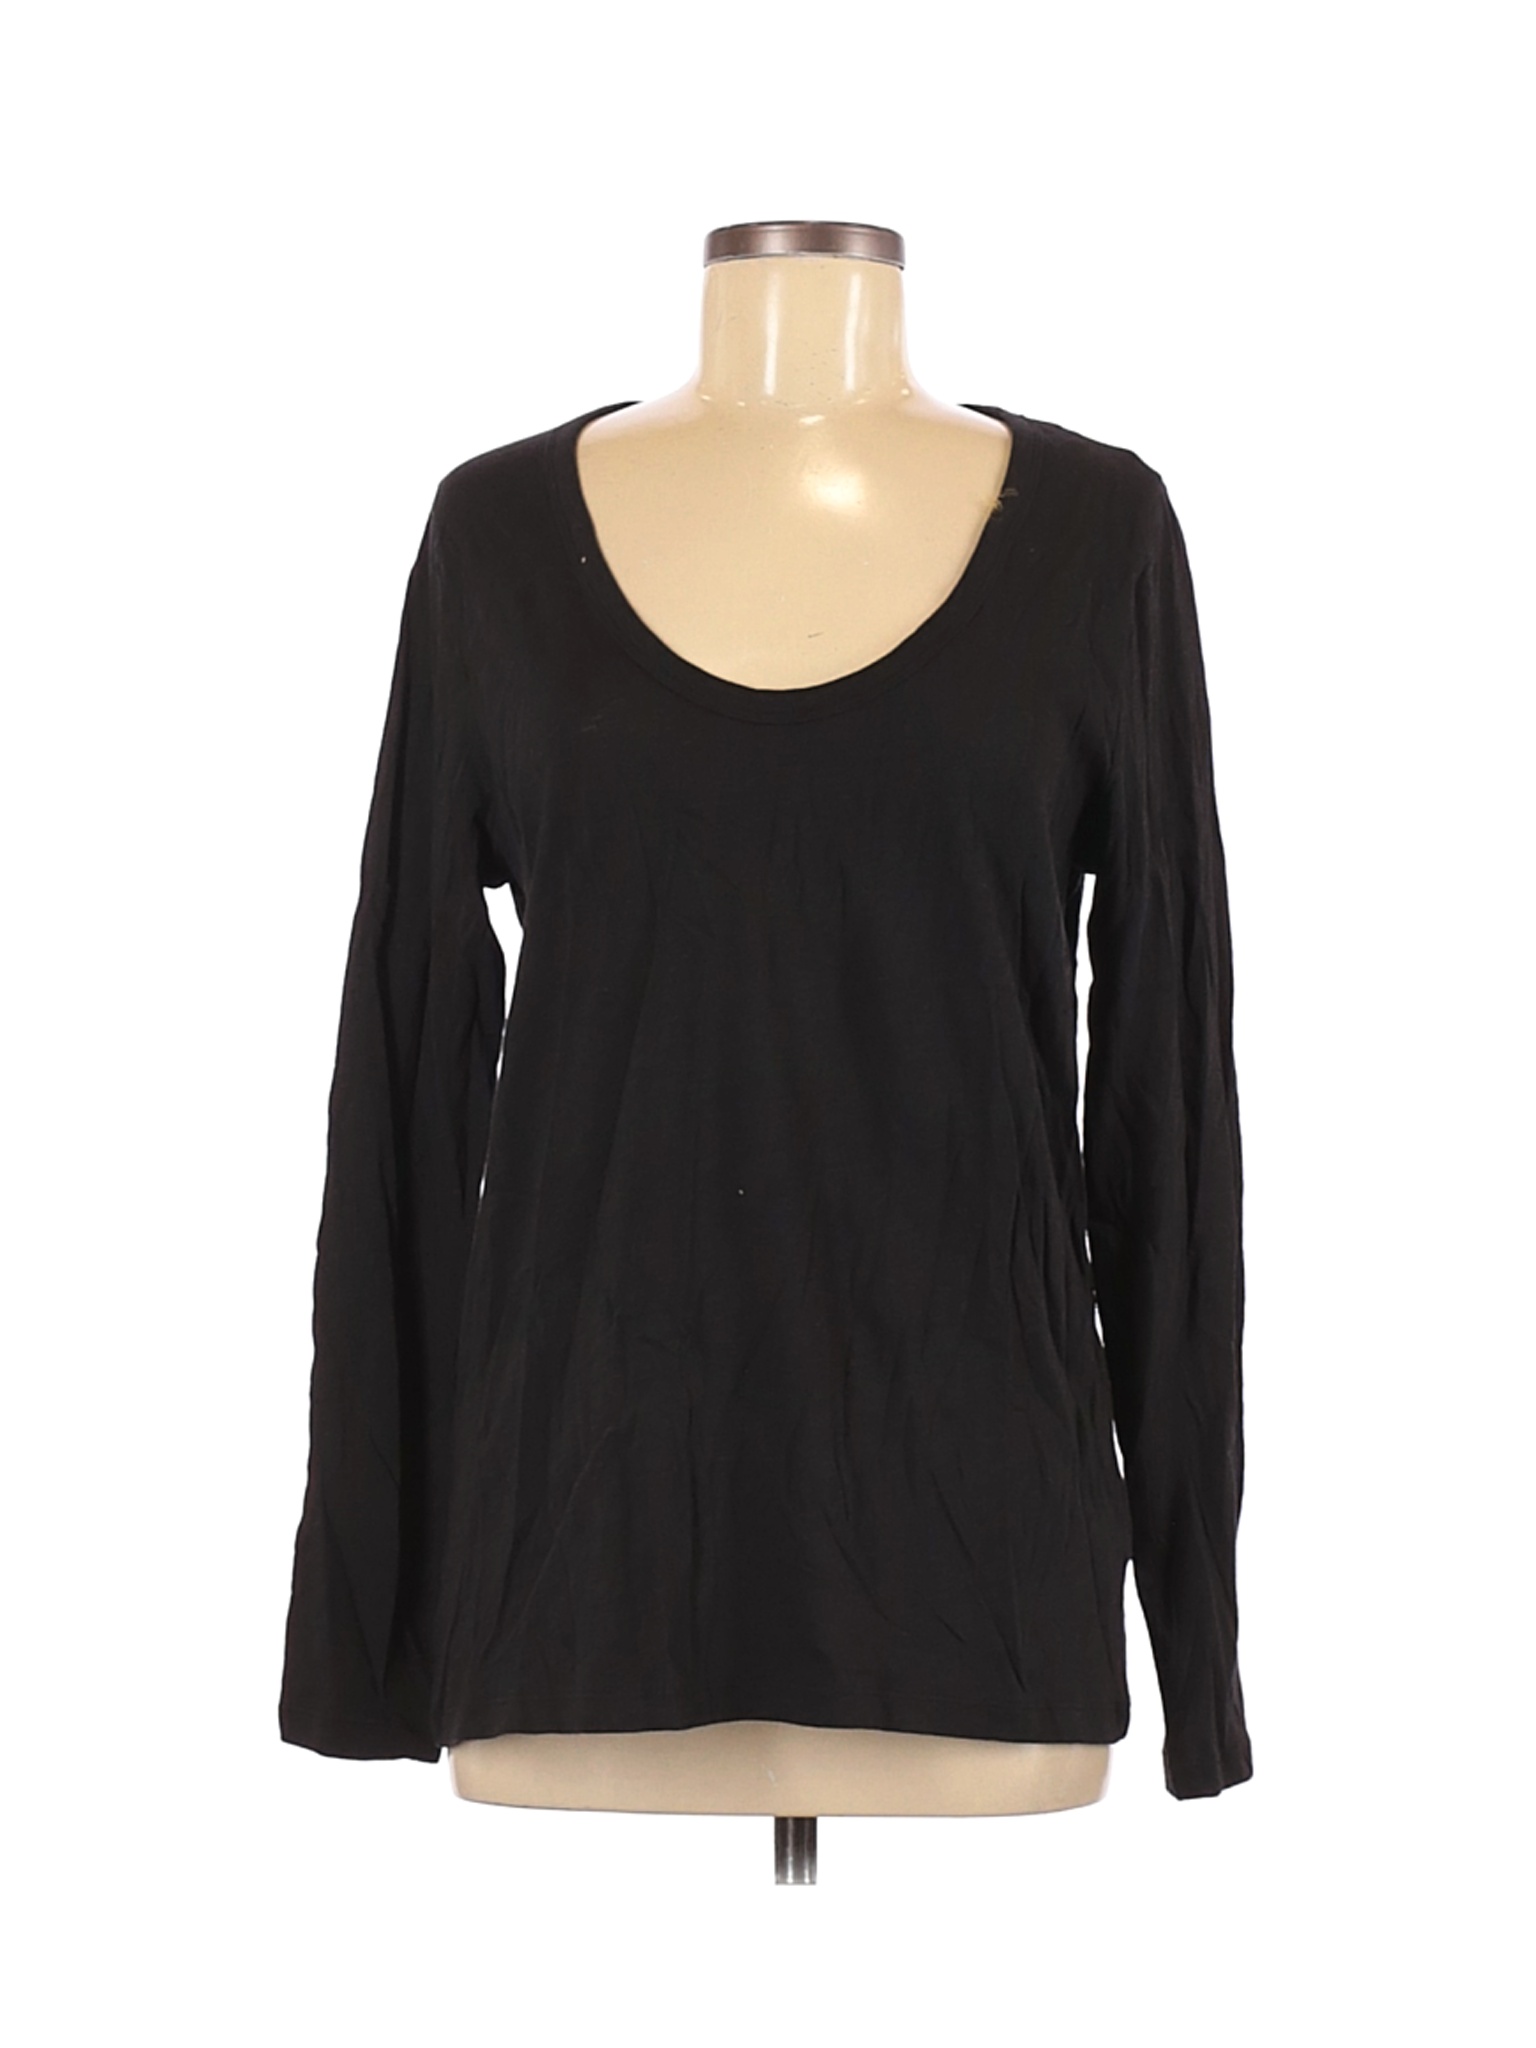 J.Crew Women Black Long Sleeve T-Shirt L | eBay